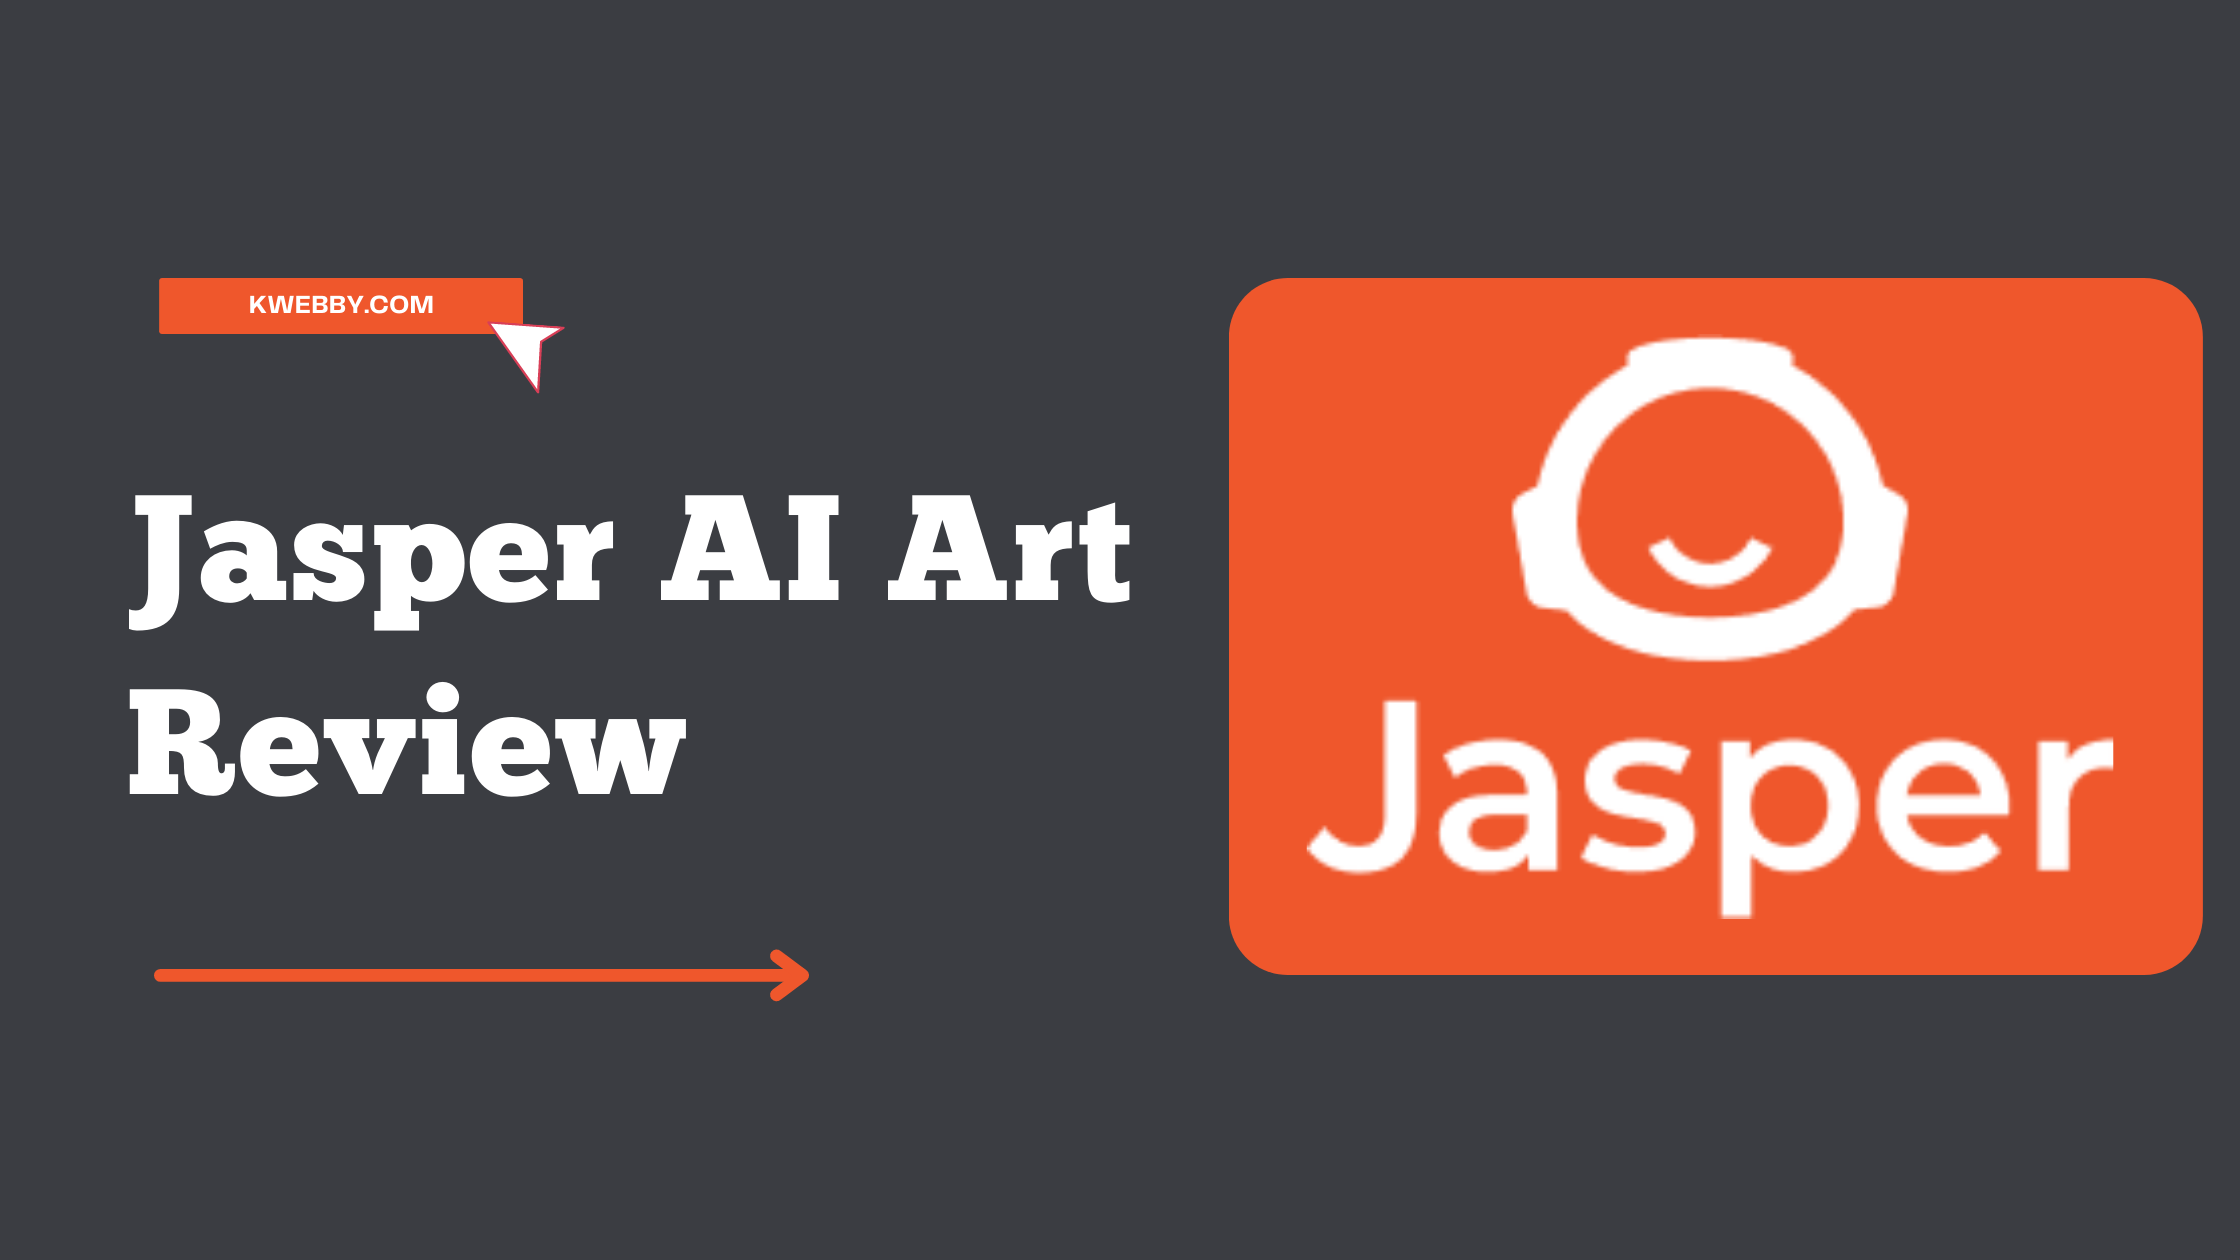 Jasper Art Review